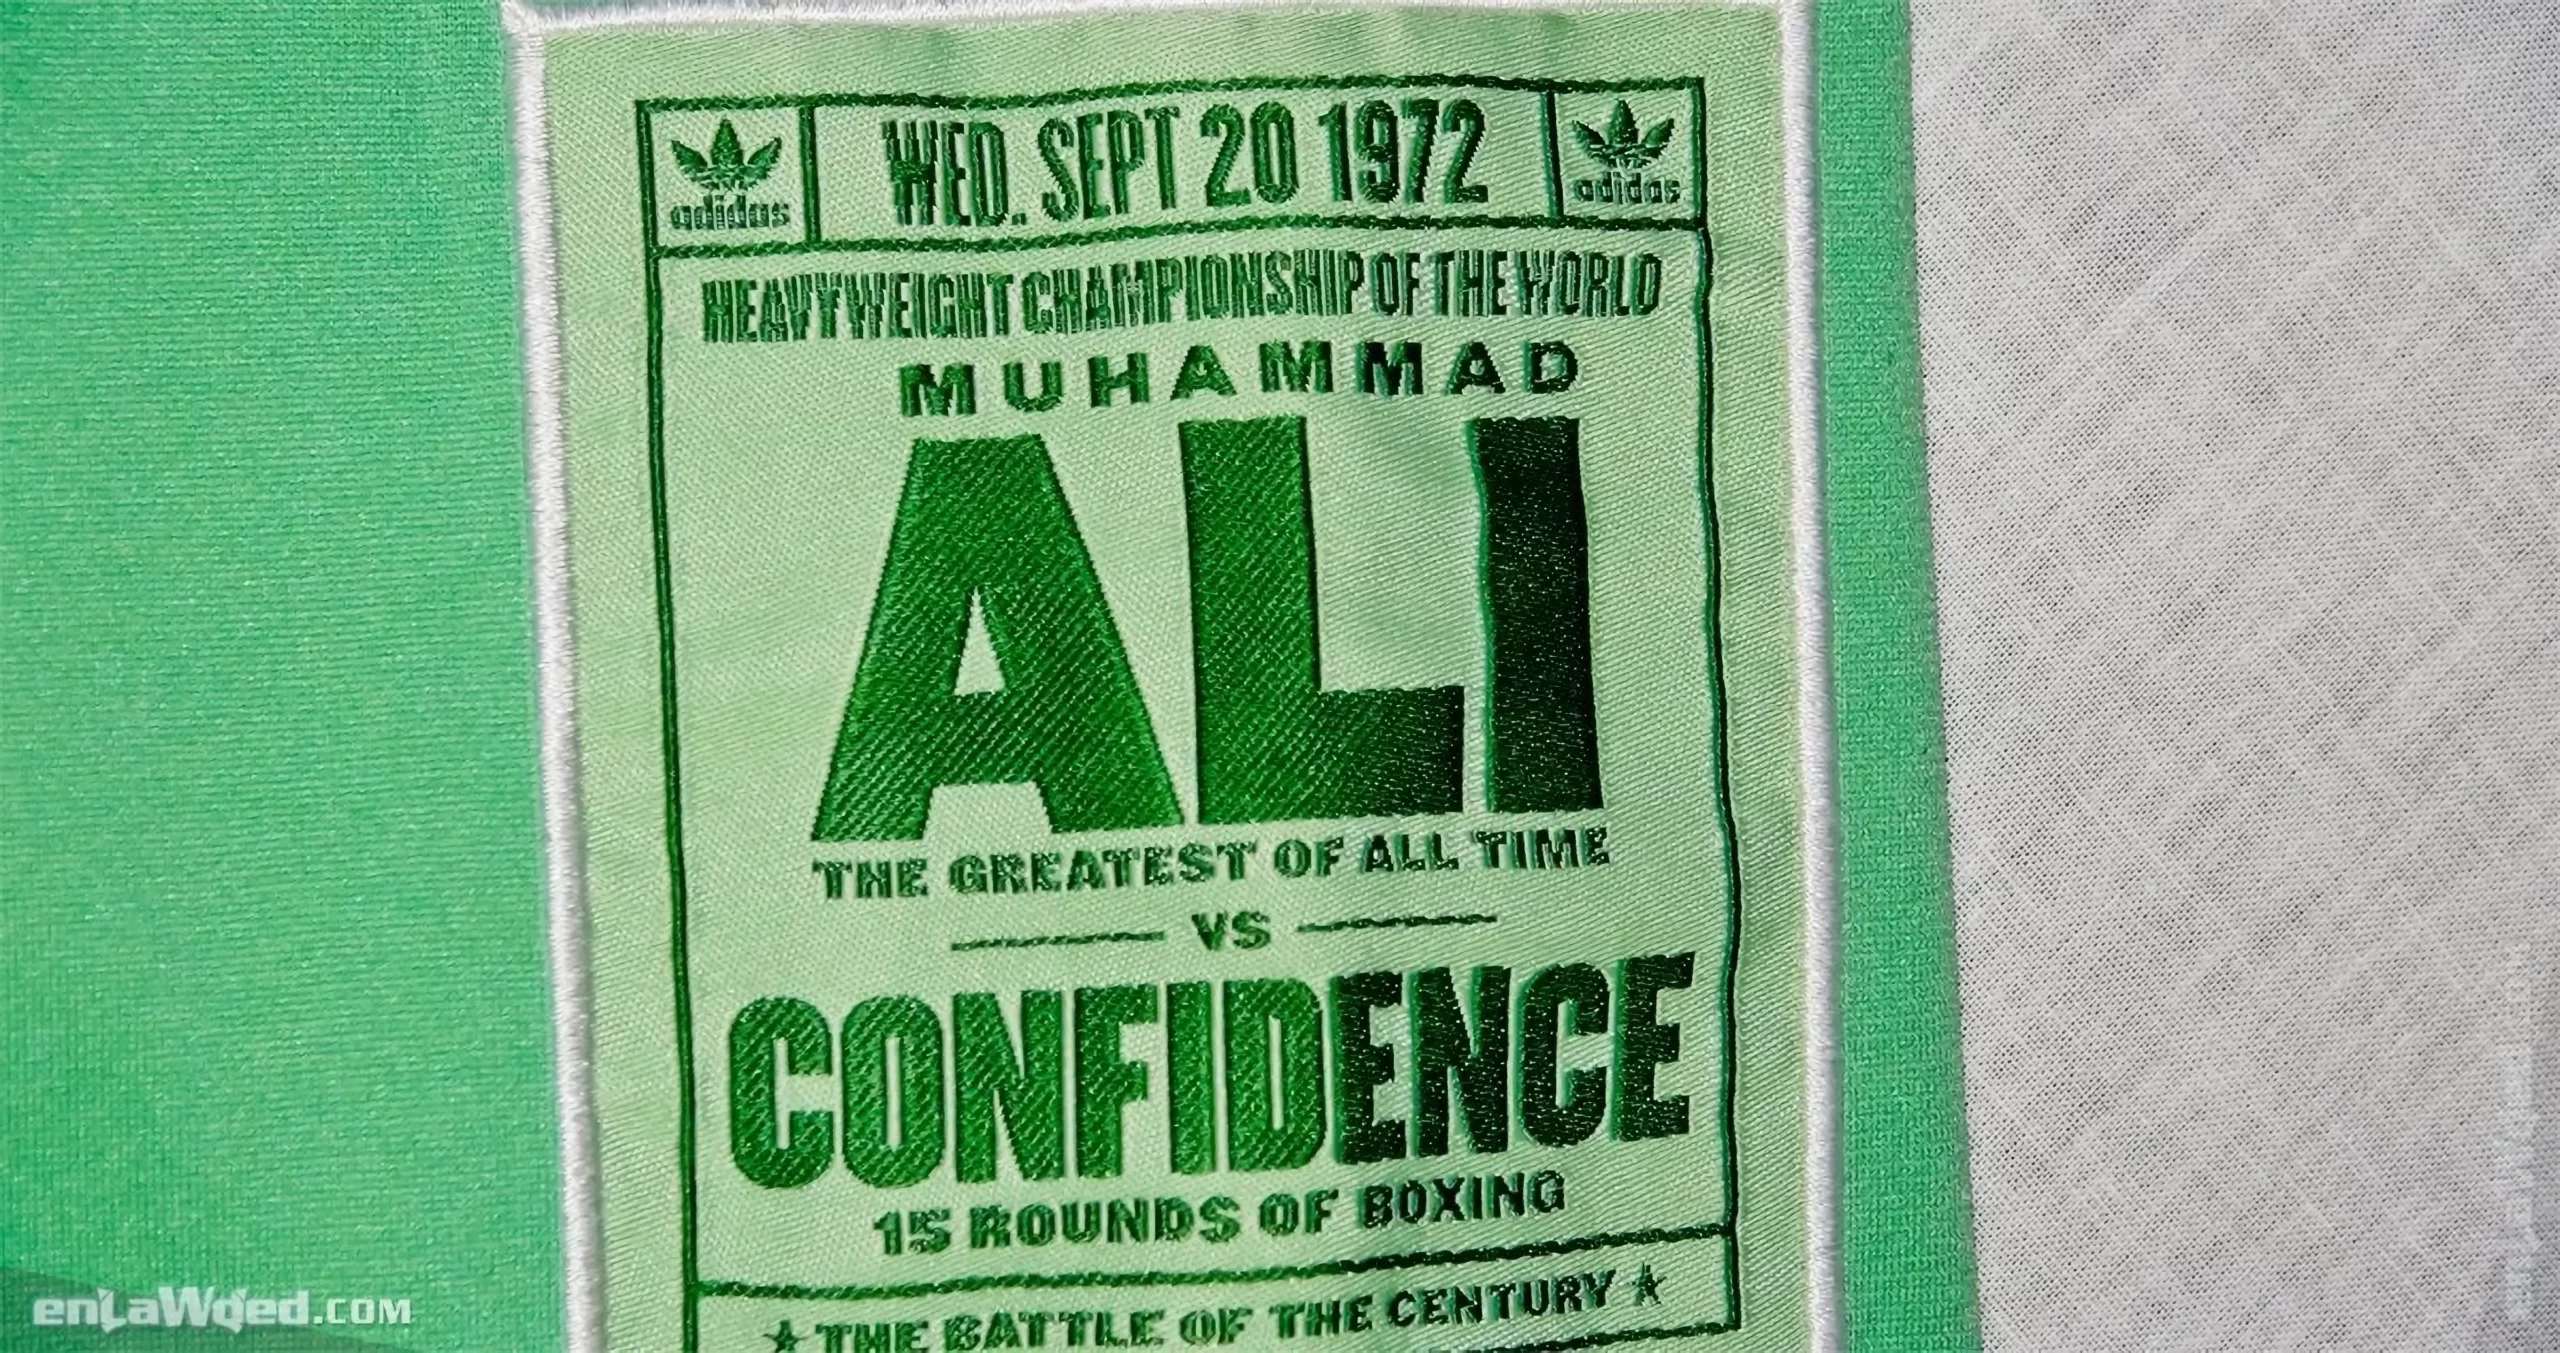 Men’s 2007 Muhammad Ali Confidence TT by Adidas: Launching (EnLawded.com file #lmc4rs2prpmv804fmr)